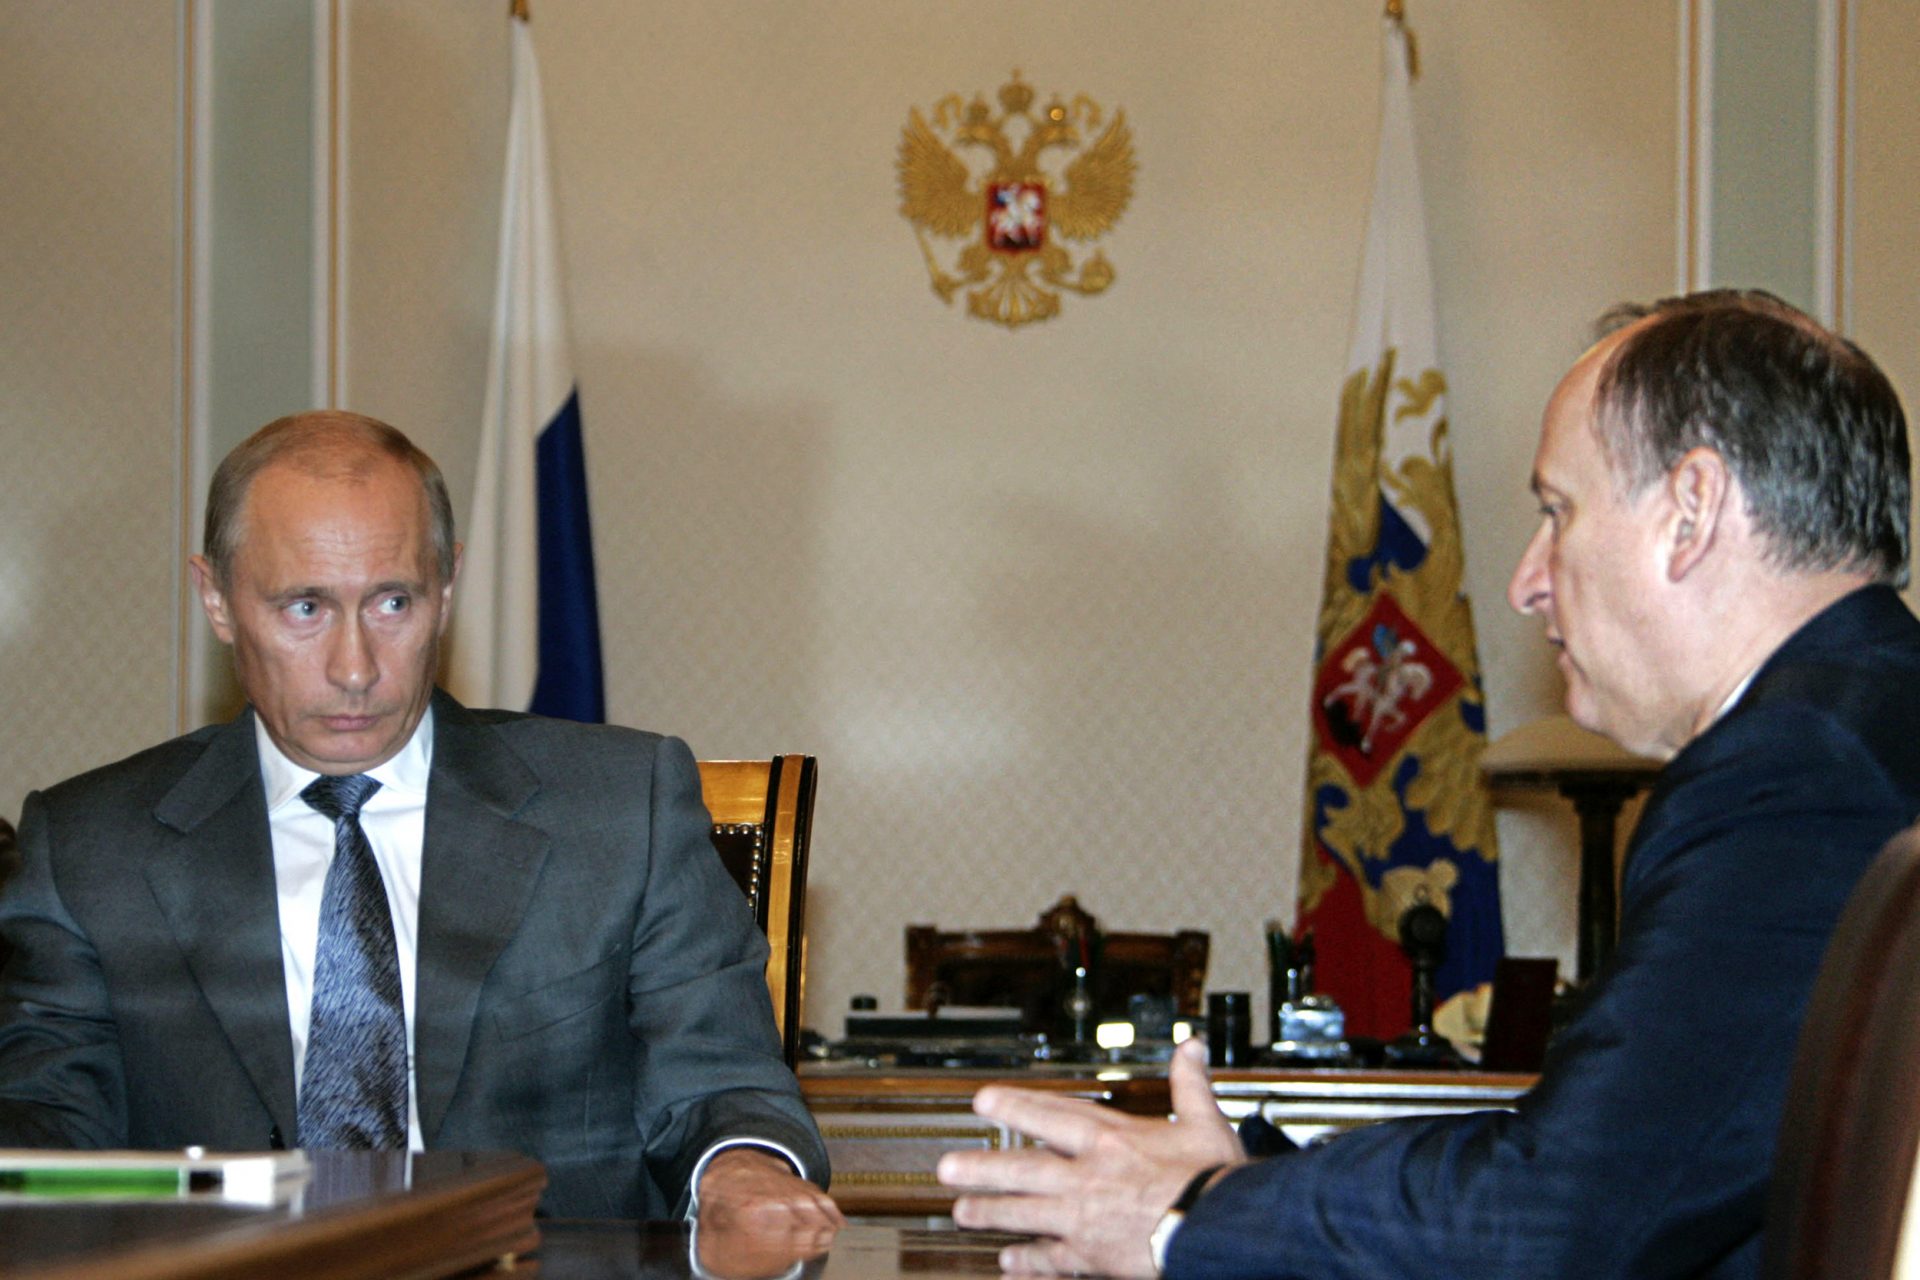 Patroesjev en Poetin zijn al lang bevriend 